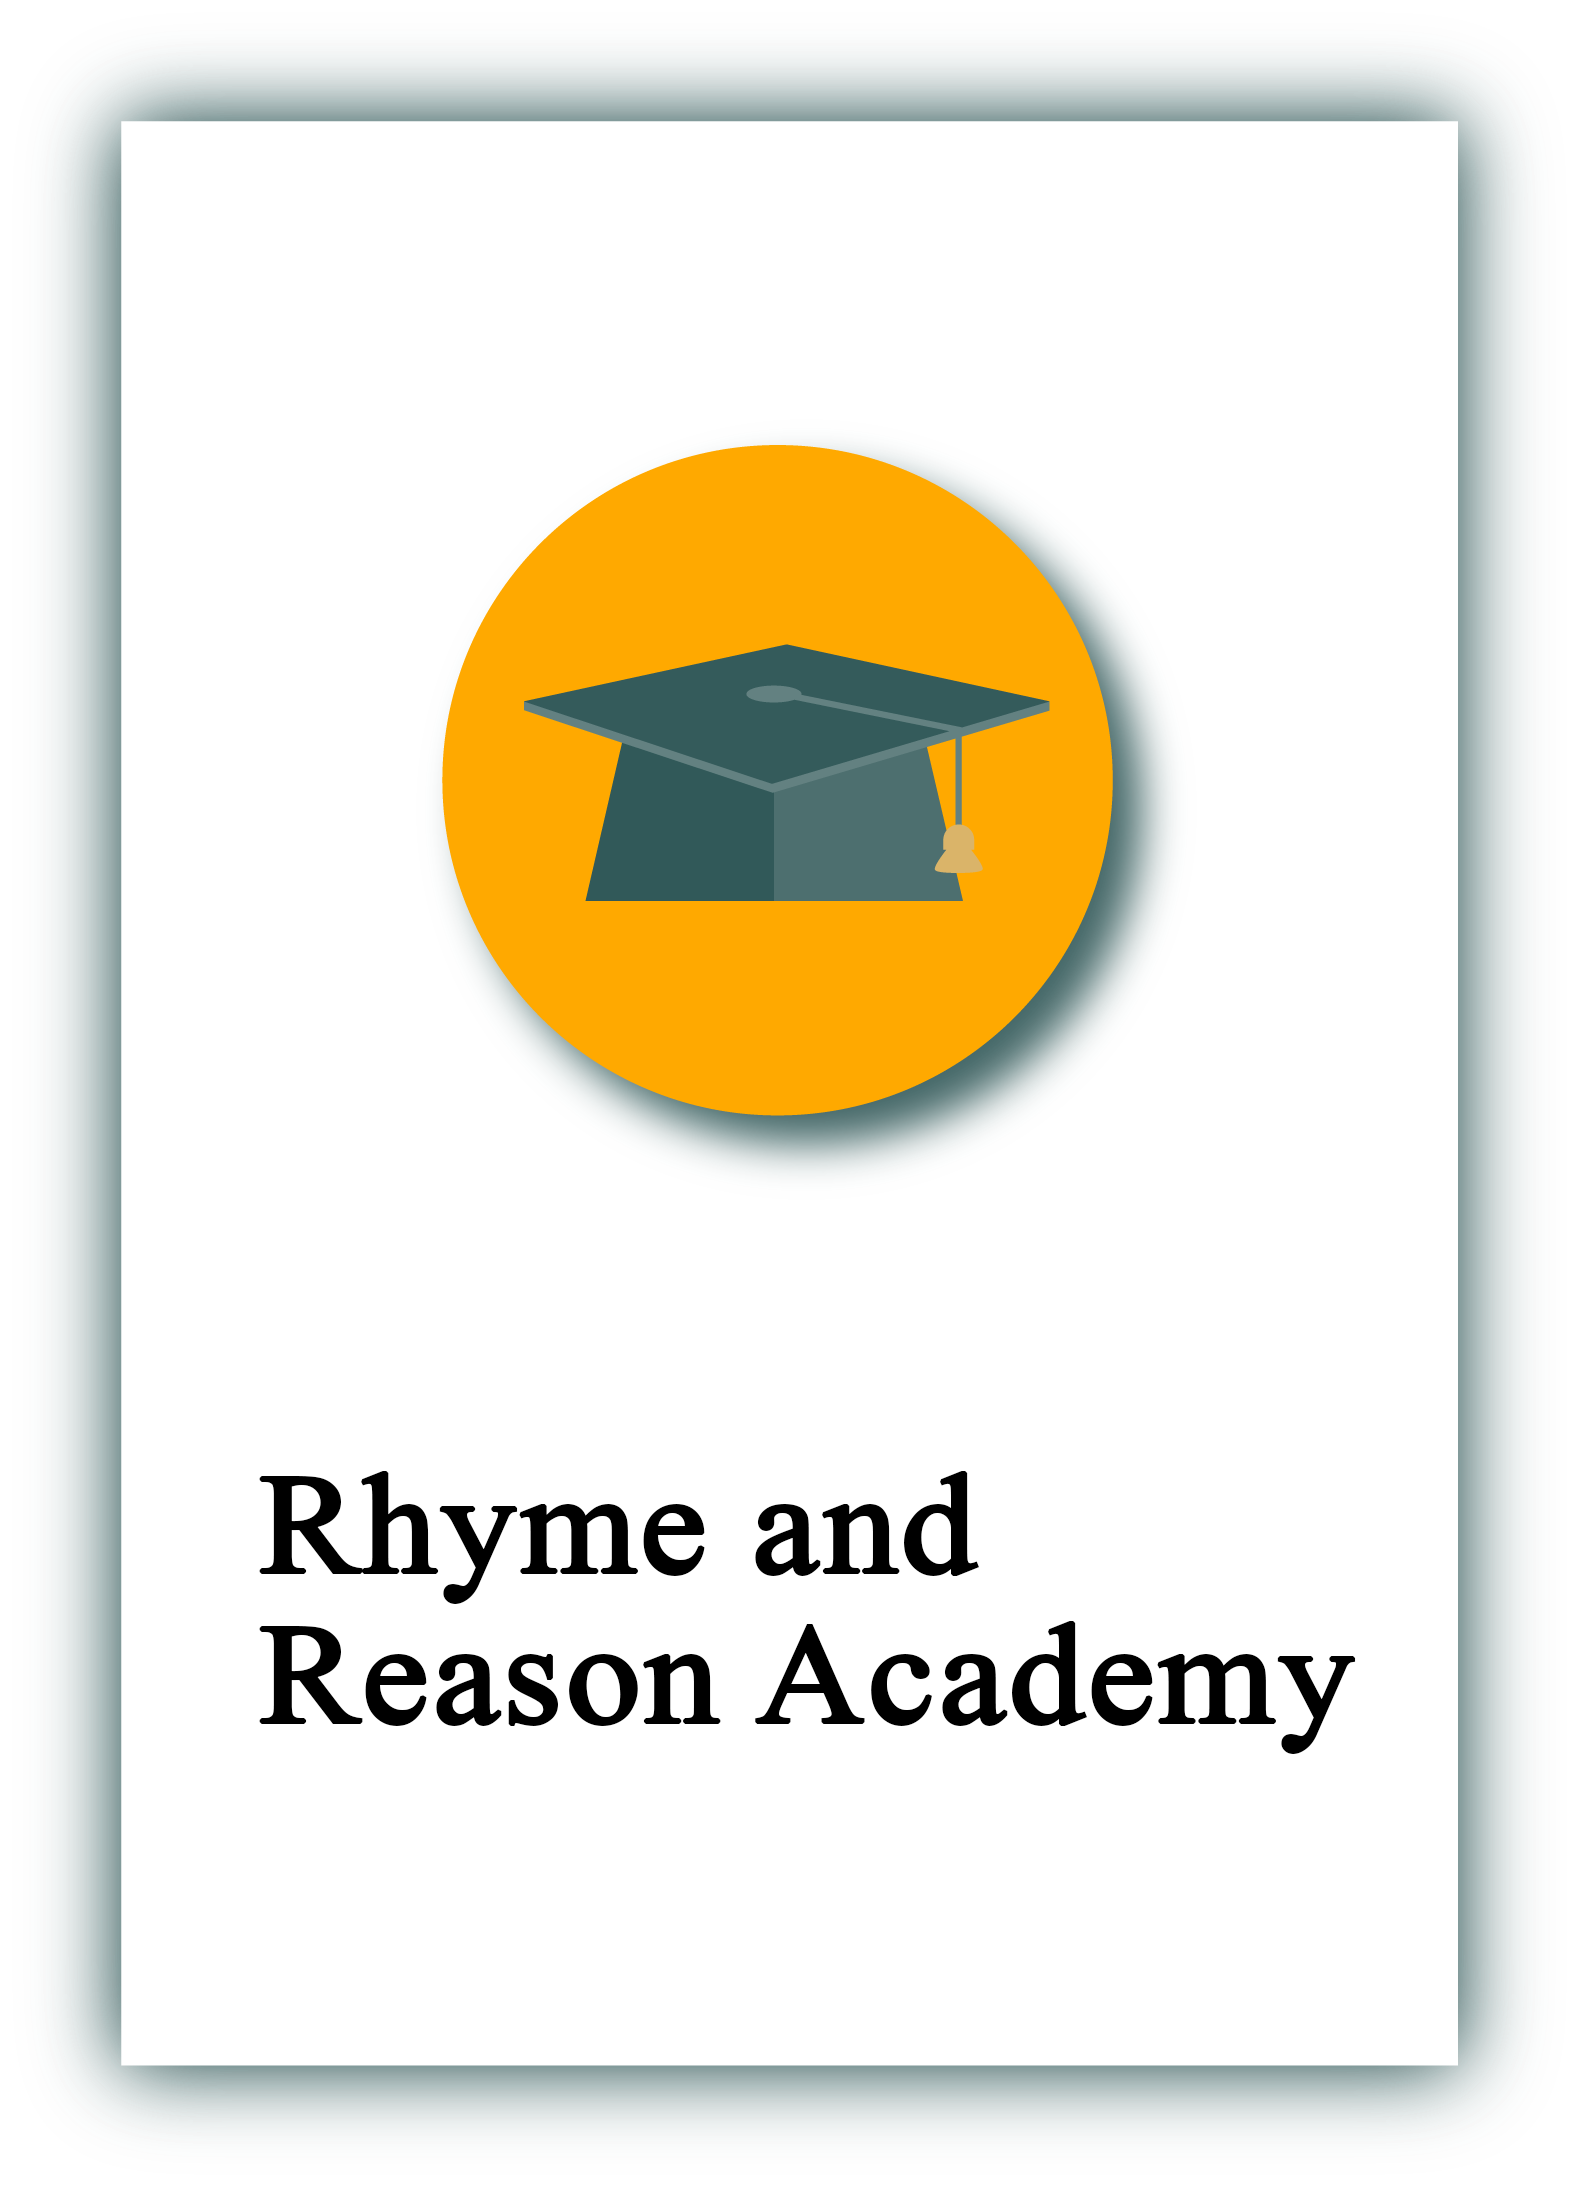 Rhyme and Reason Academy